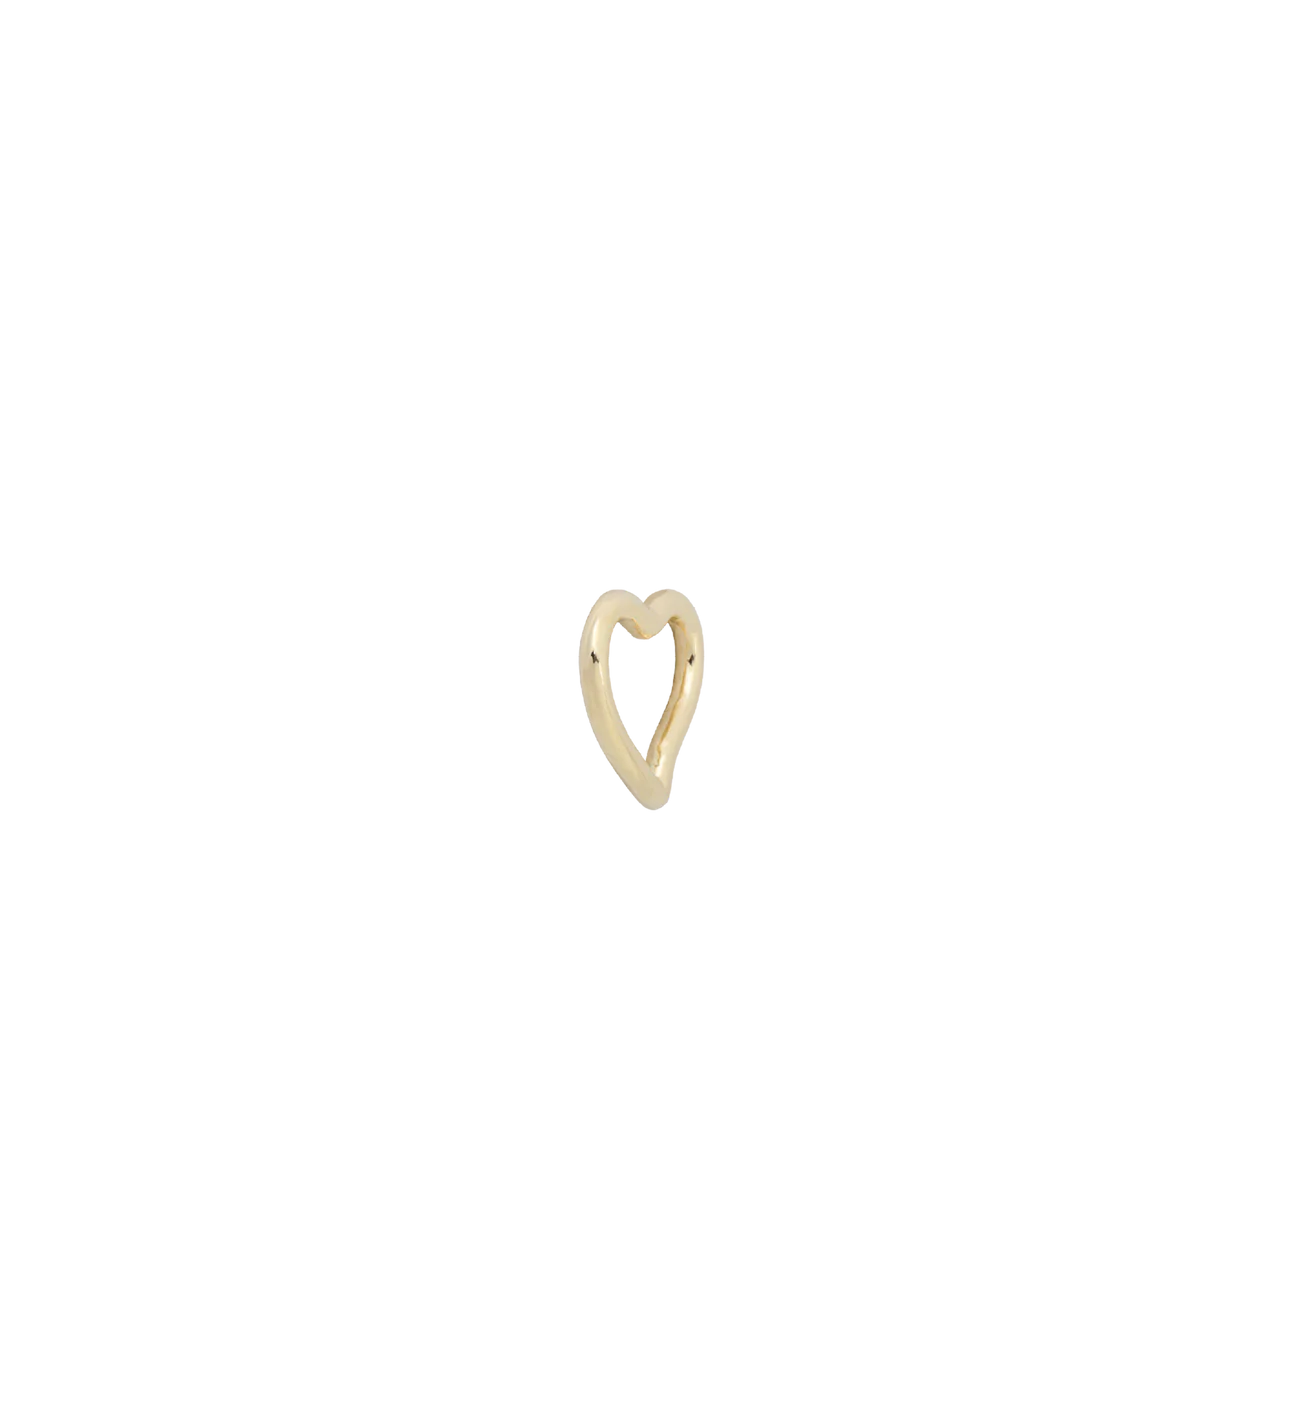 An Anna + Nina Heart Charm - Gold earring on a black background.